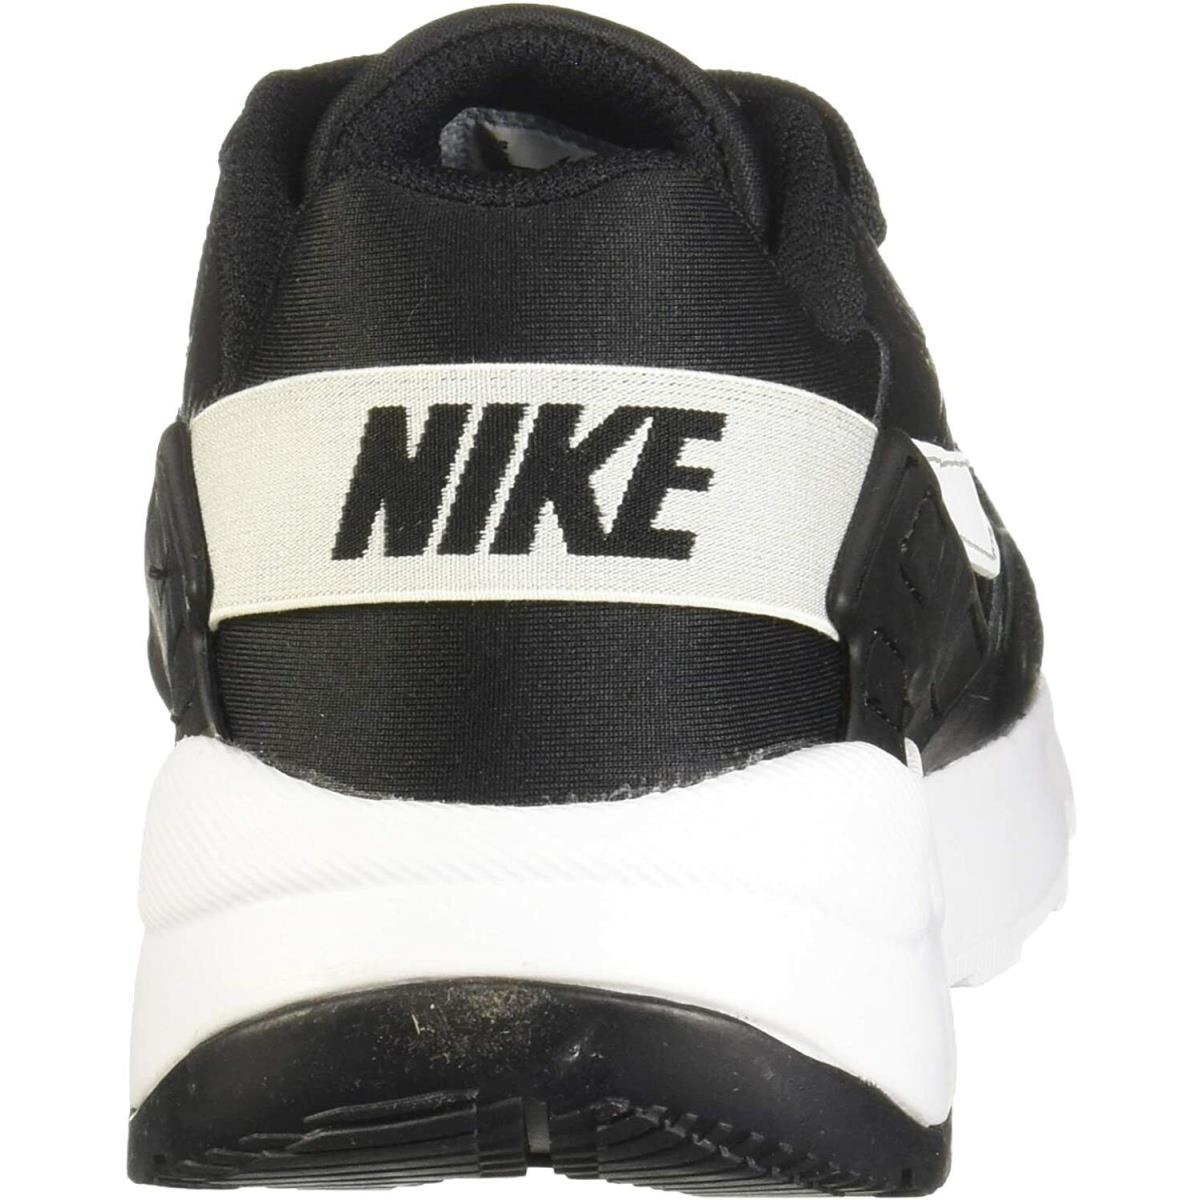 Nike shoes VICTORY - Black 1